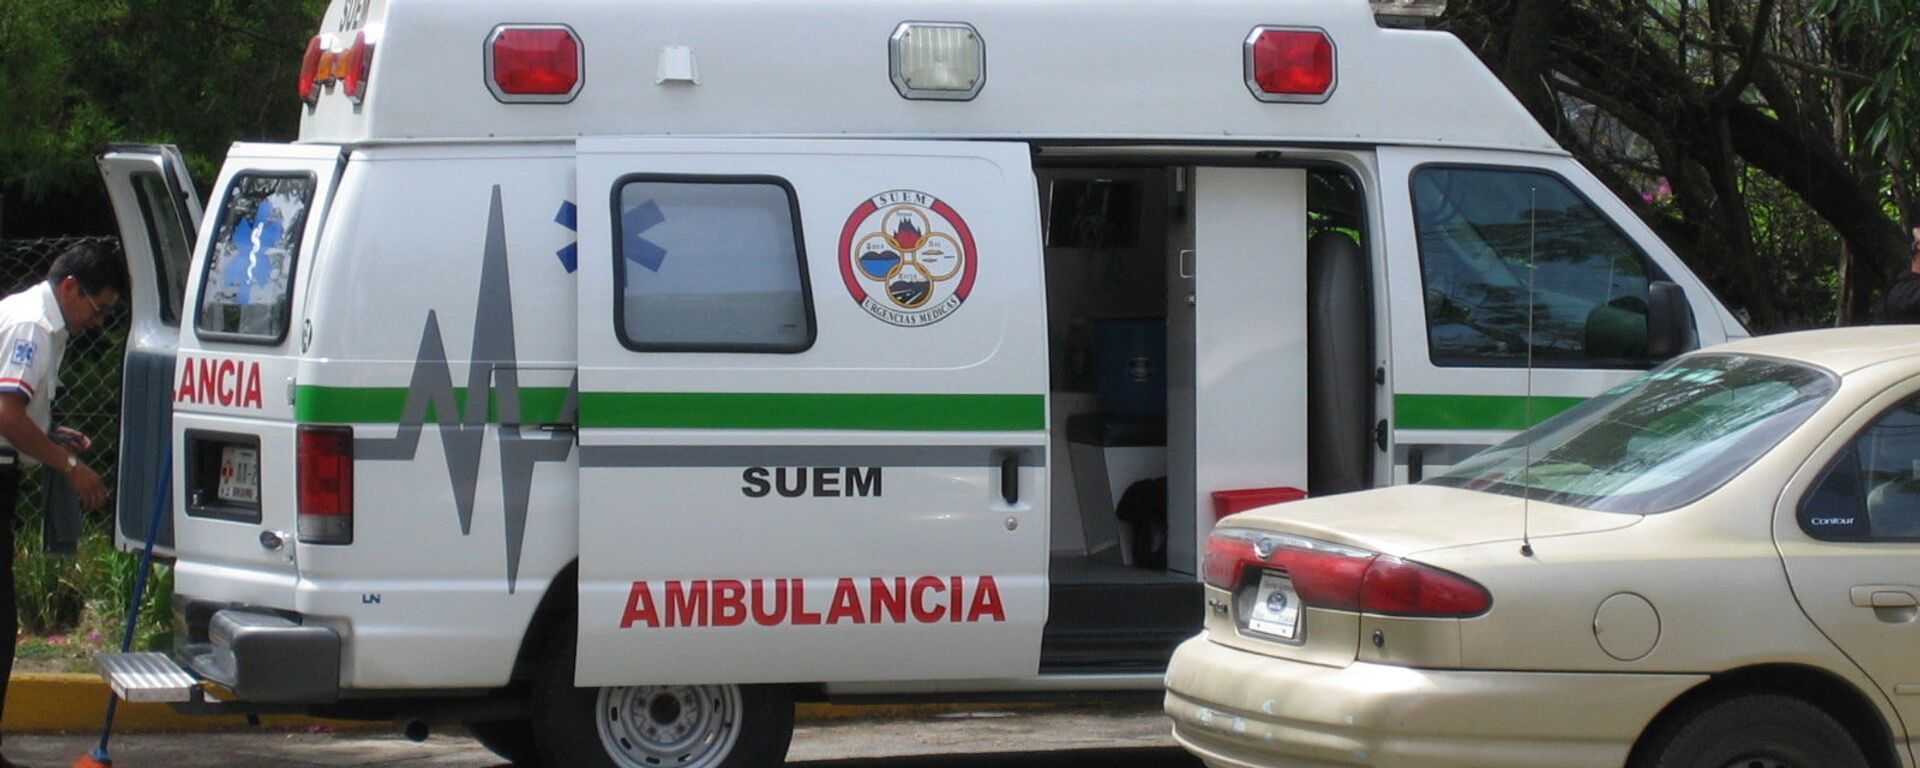 Ambulancia mexicana (archivo) - Sputnik Mundo, 1920, 09.06.2021